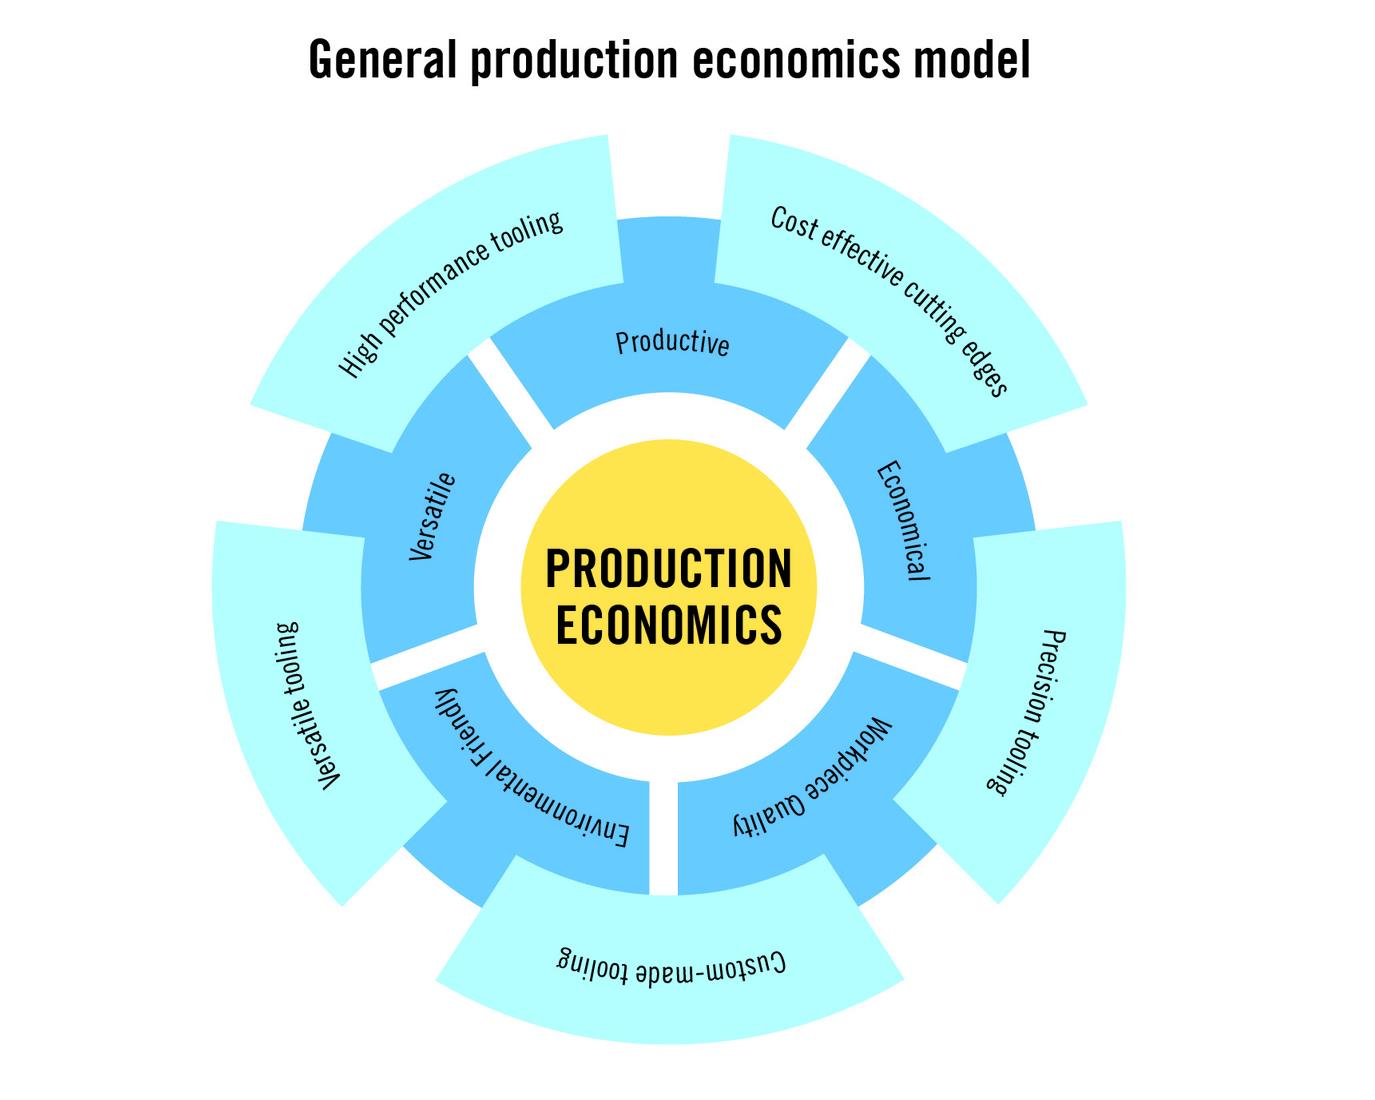 HQ_ILL_General_Production_Economics_Model.jpg